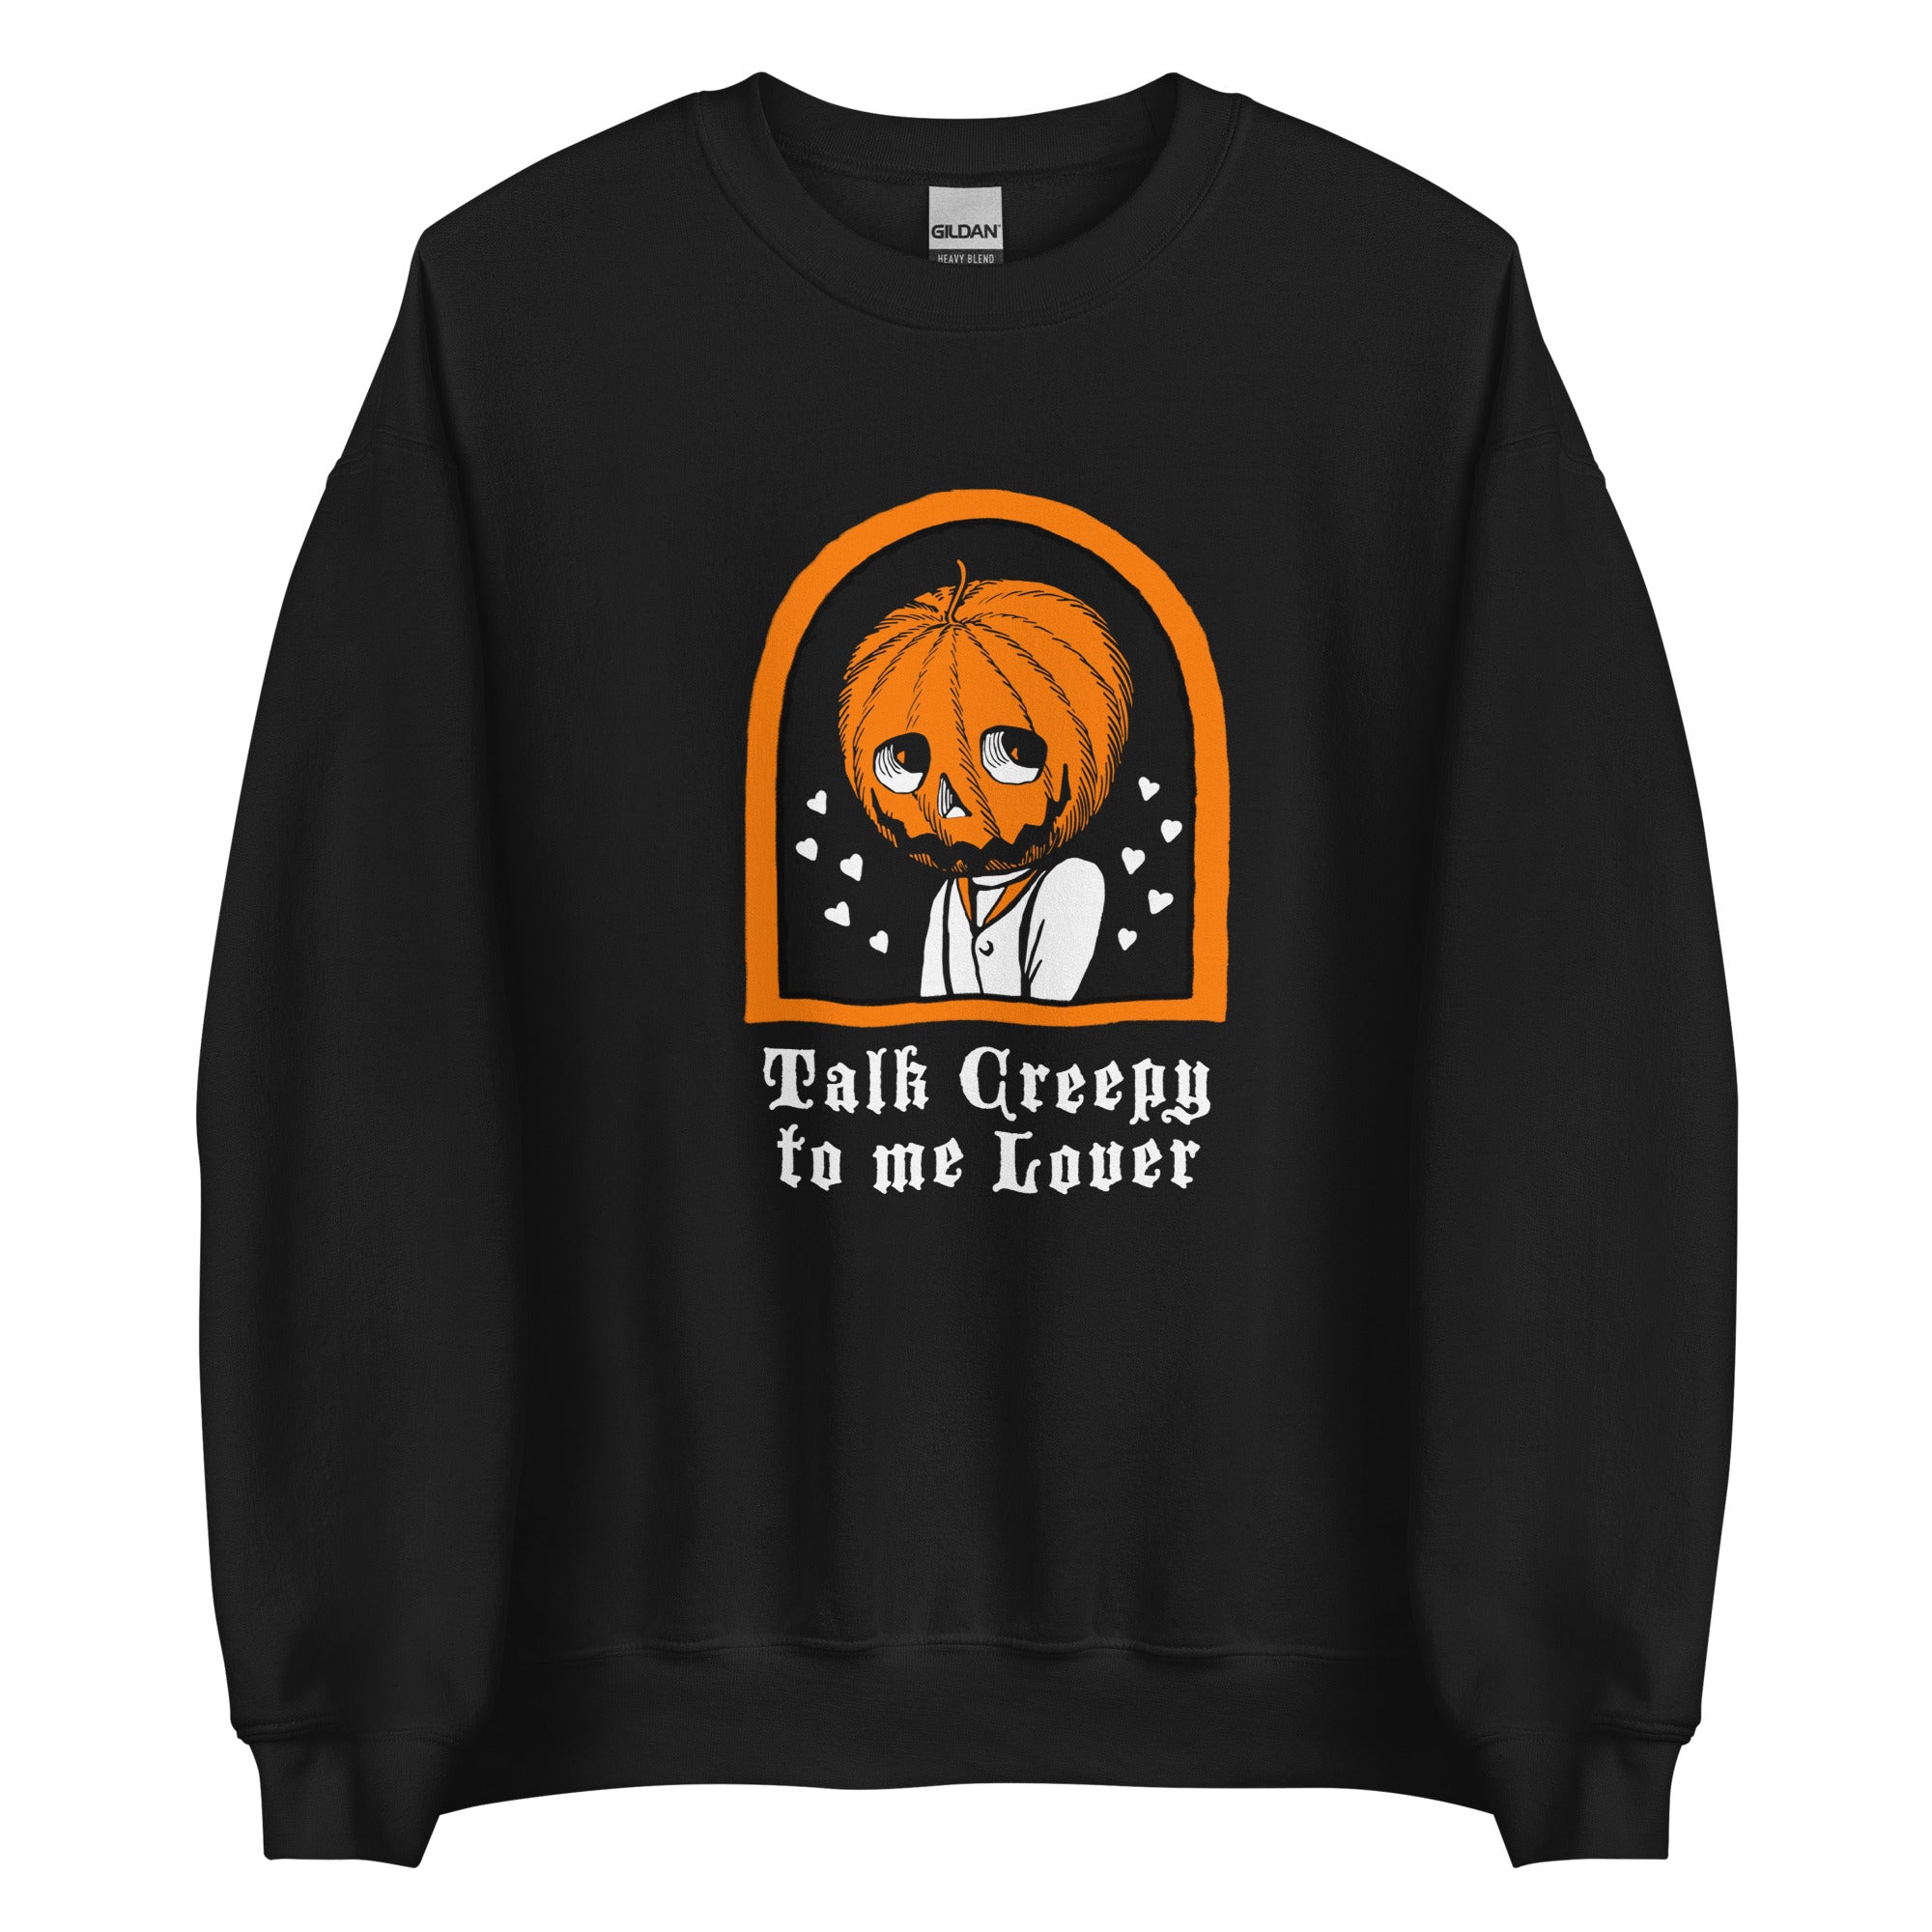 Talk Creepy To Me Lover Sweatshirt